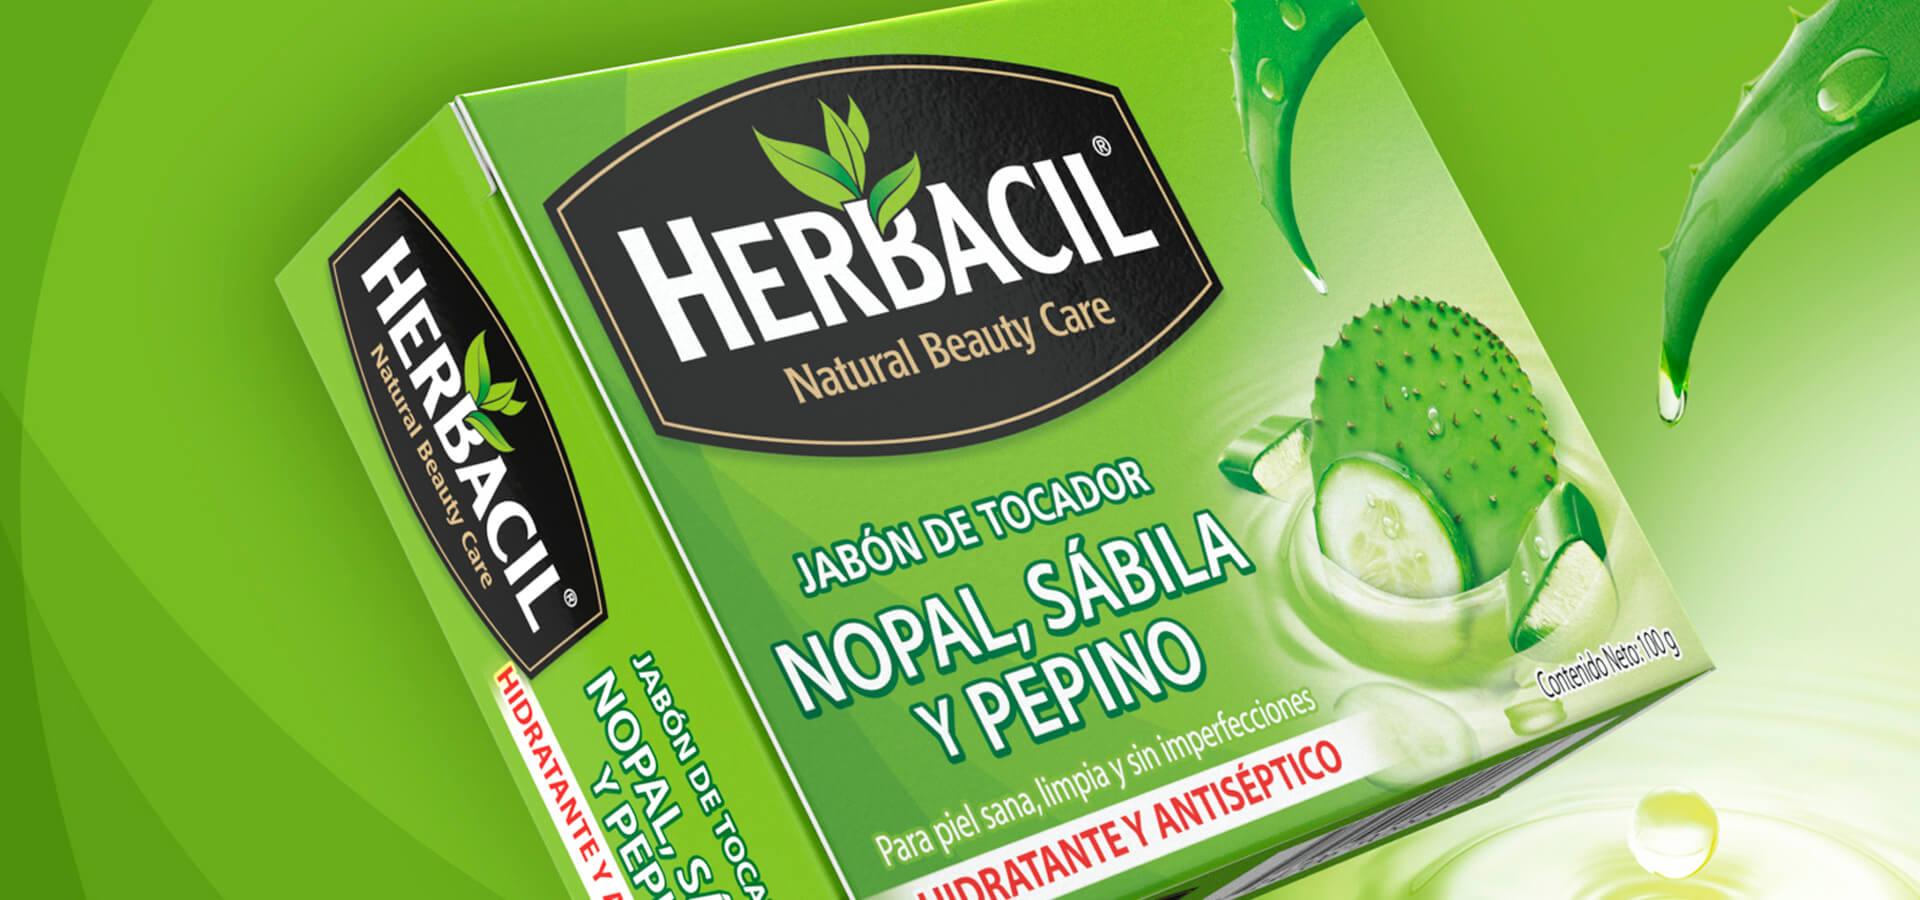 Jabones Herbacil